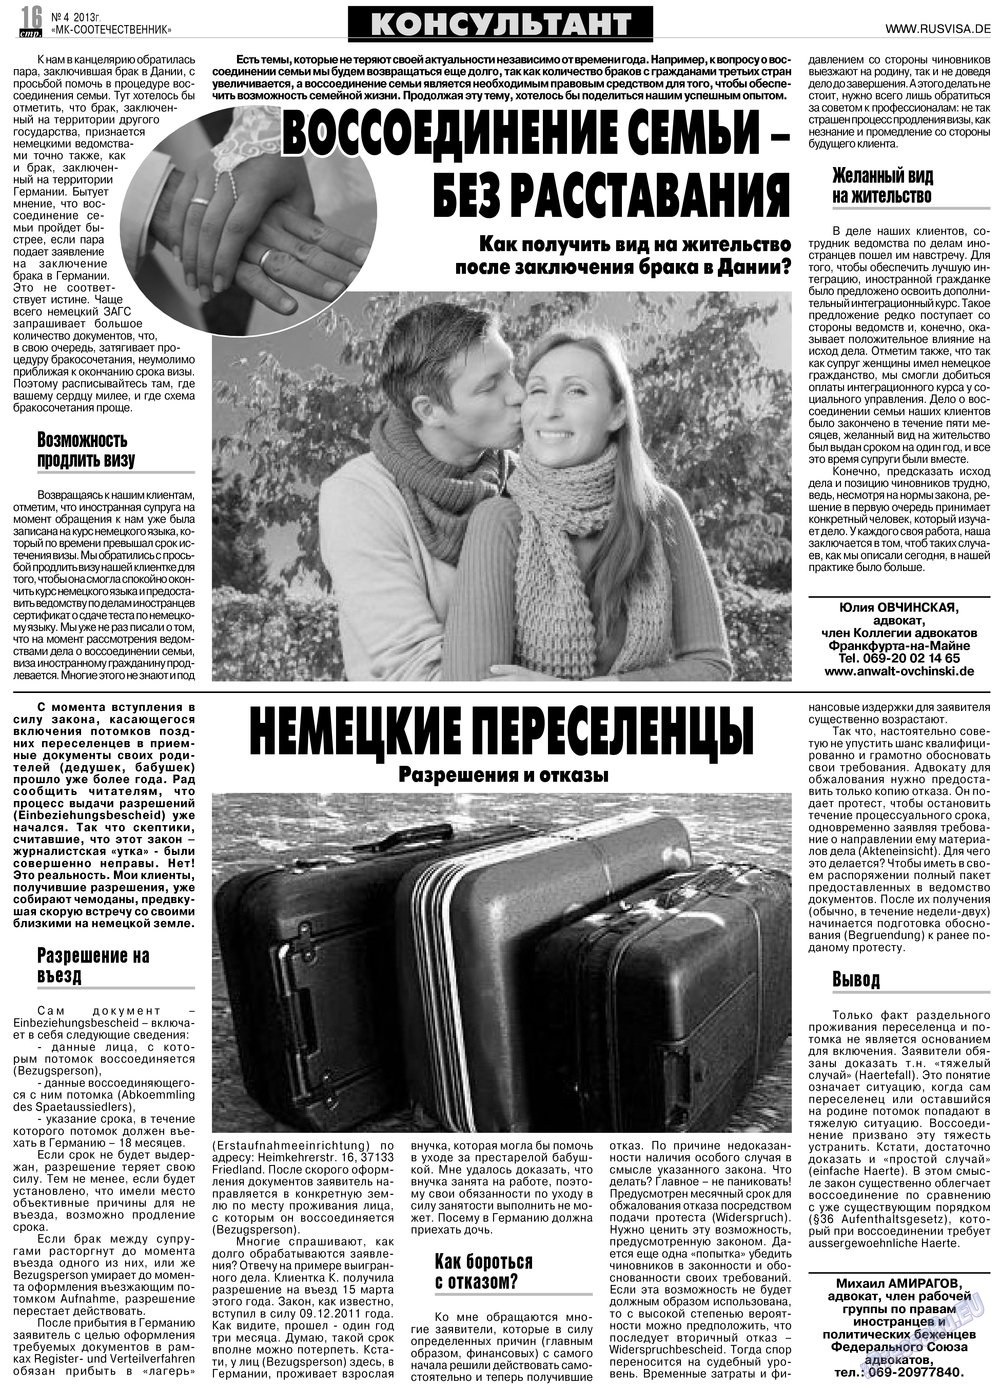 МК-Германия планета мнений, газета. 2013 №4 стр.16